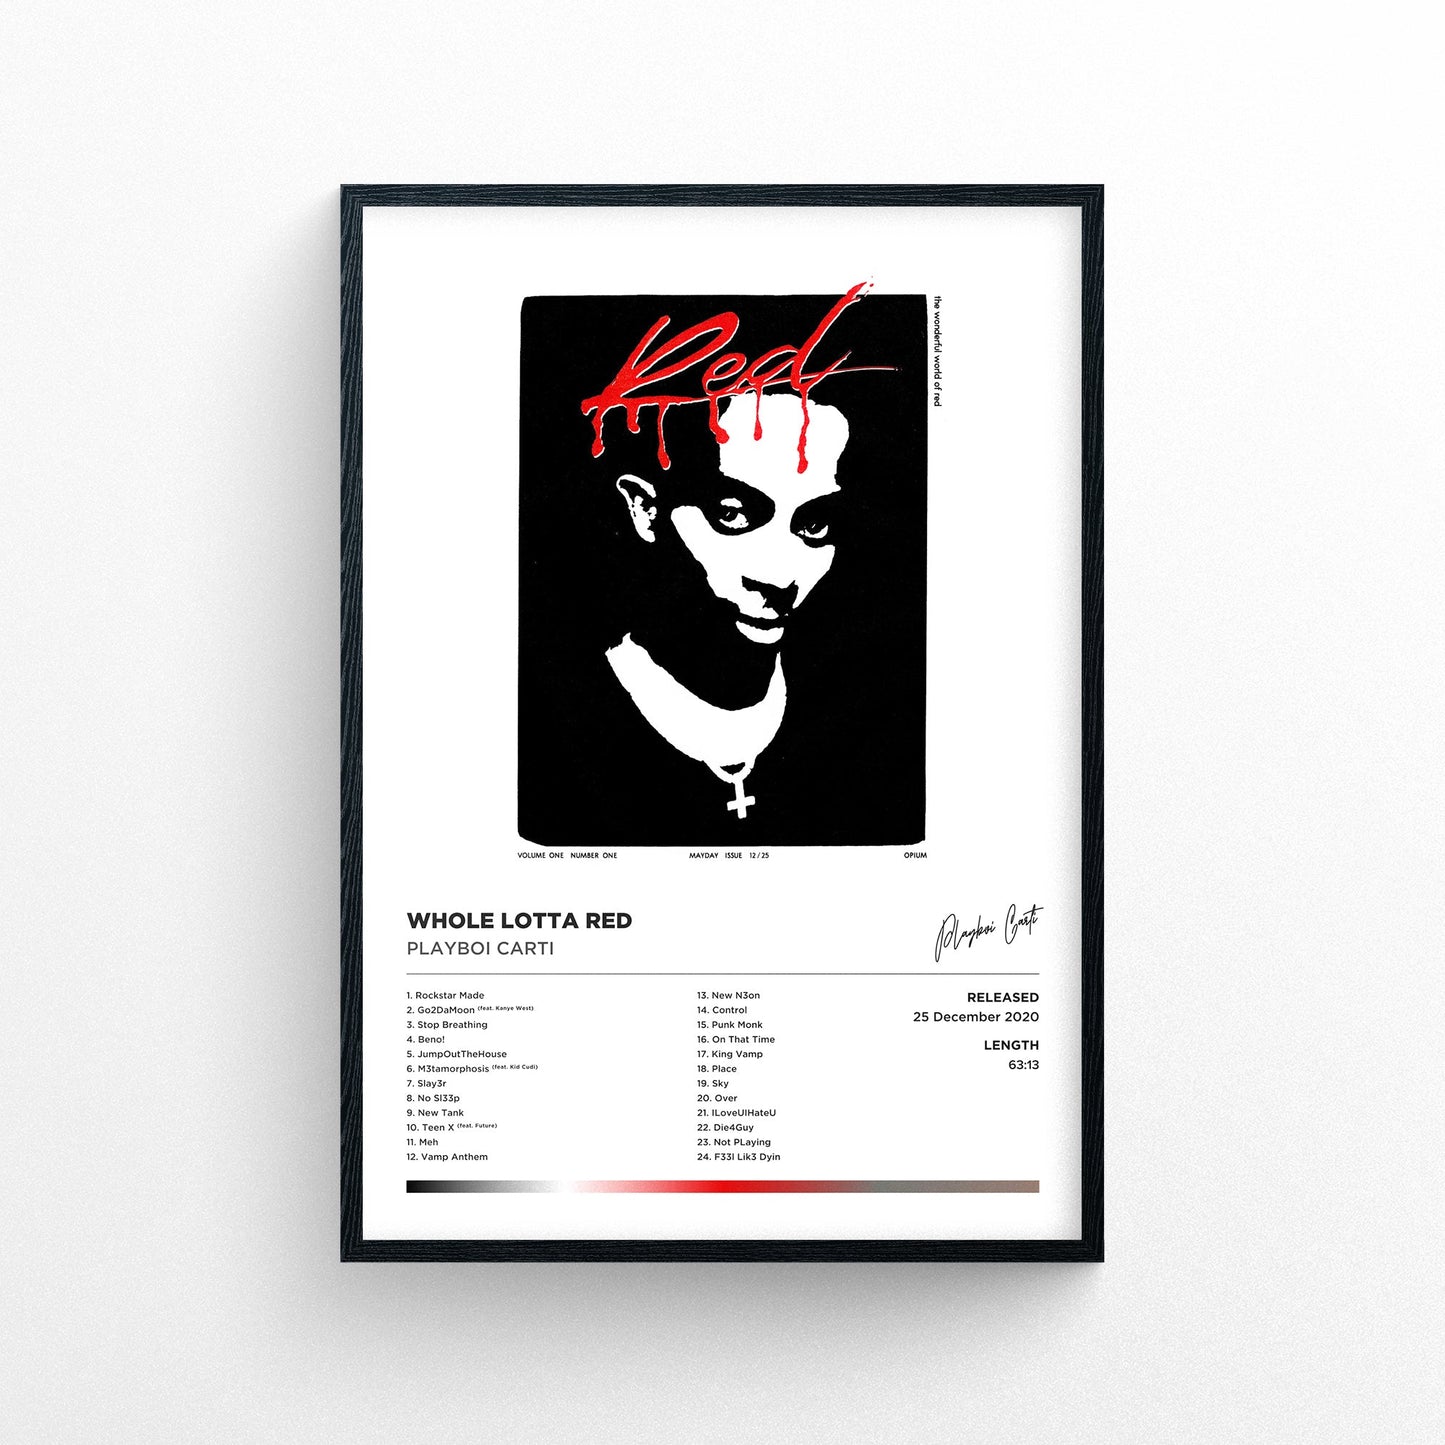 Playboi Carti - Whole Lotta Red Framed Poster Print | Polaroid Style | Album Cover Artwork